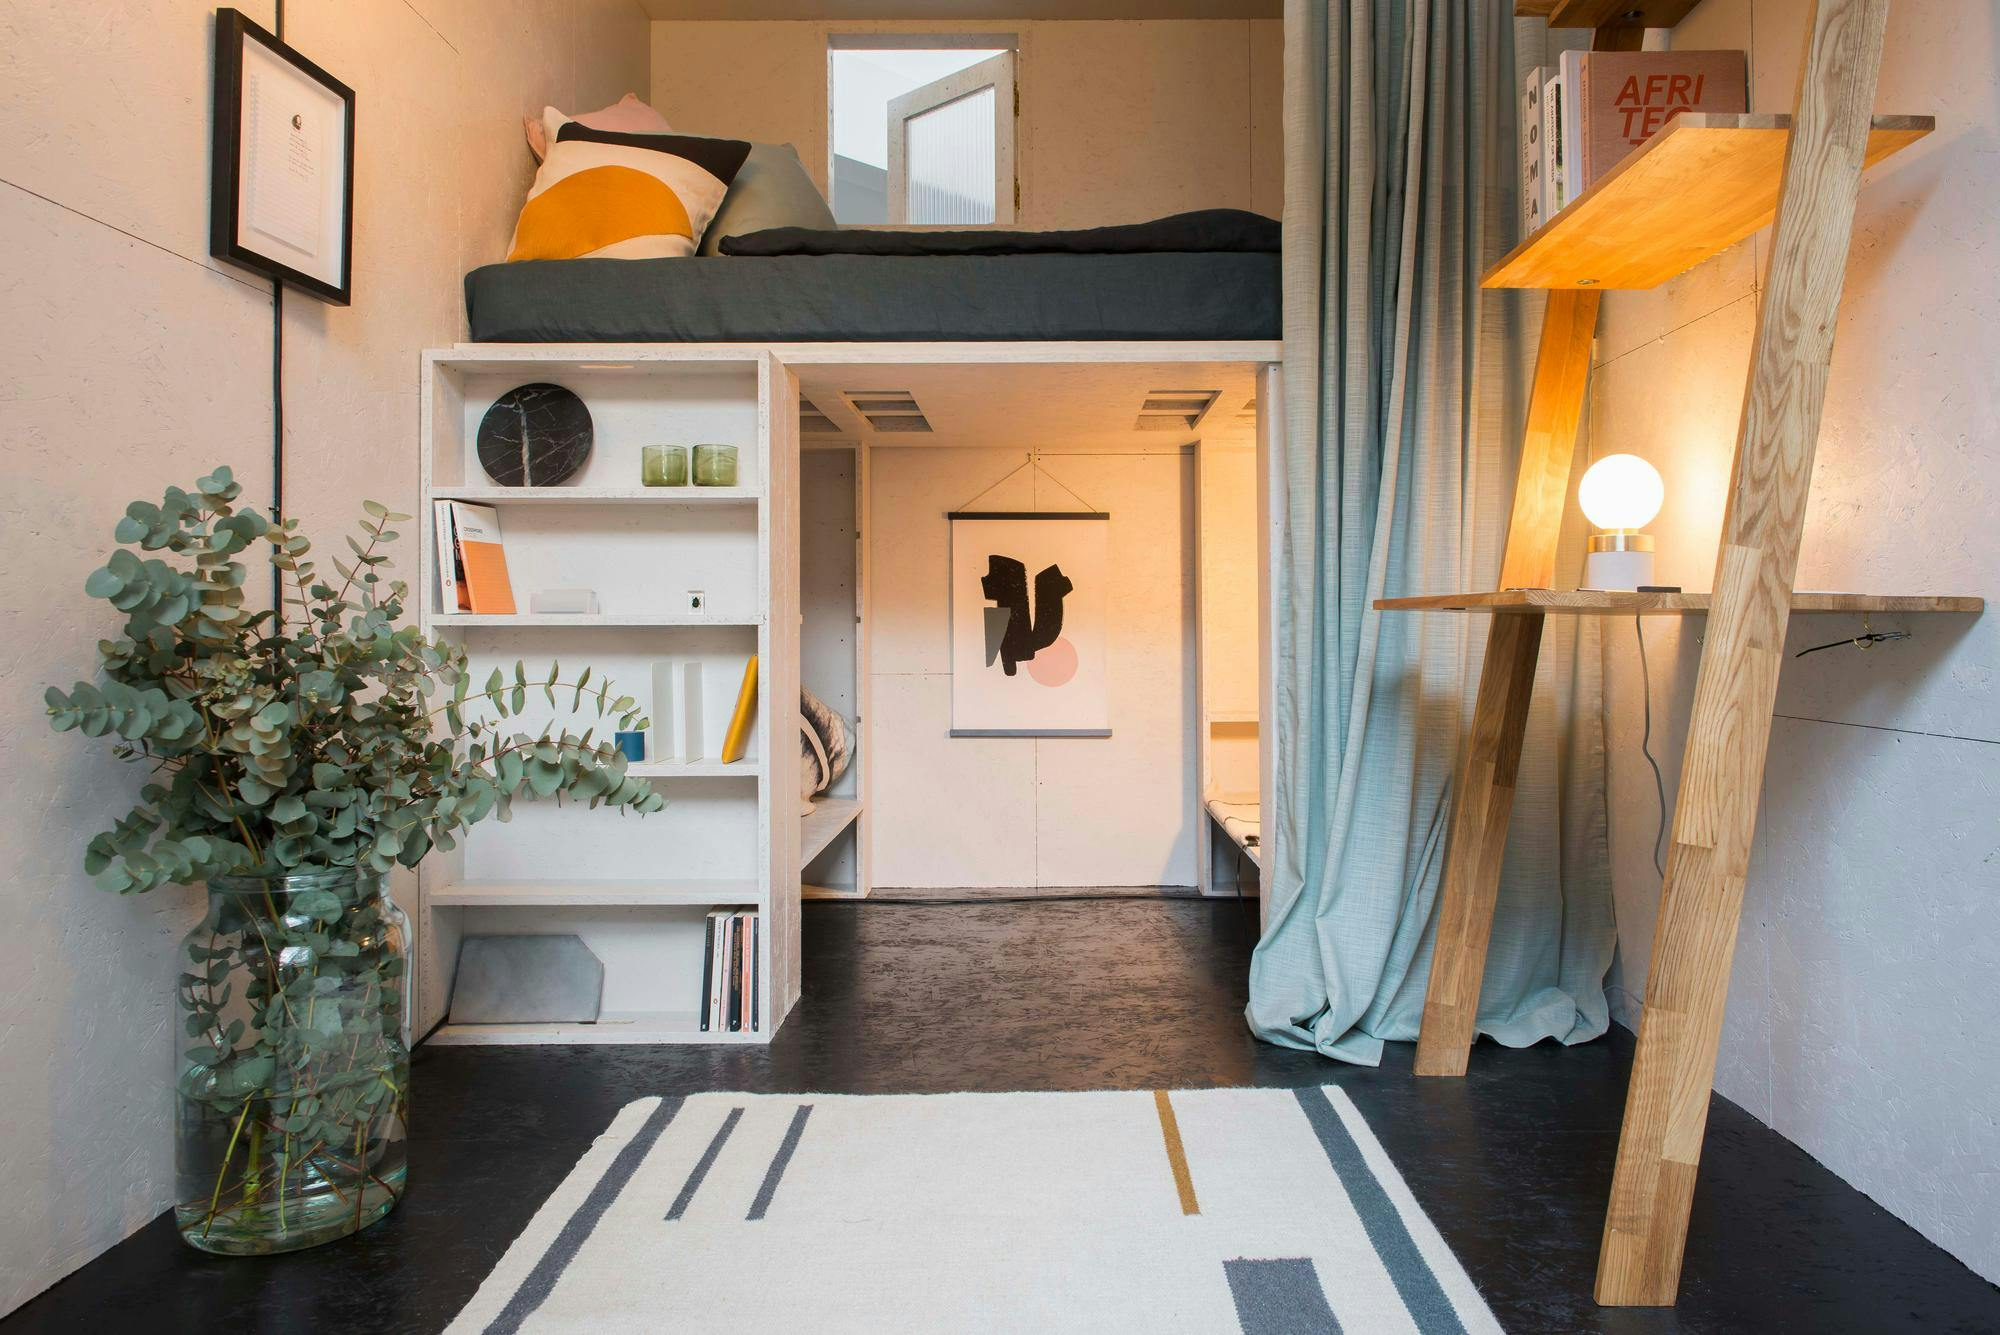 Tiny home design by Studio Bark